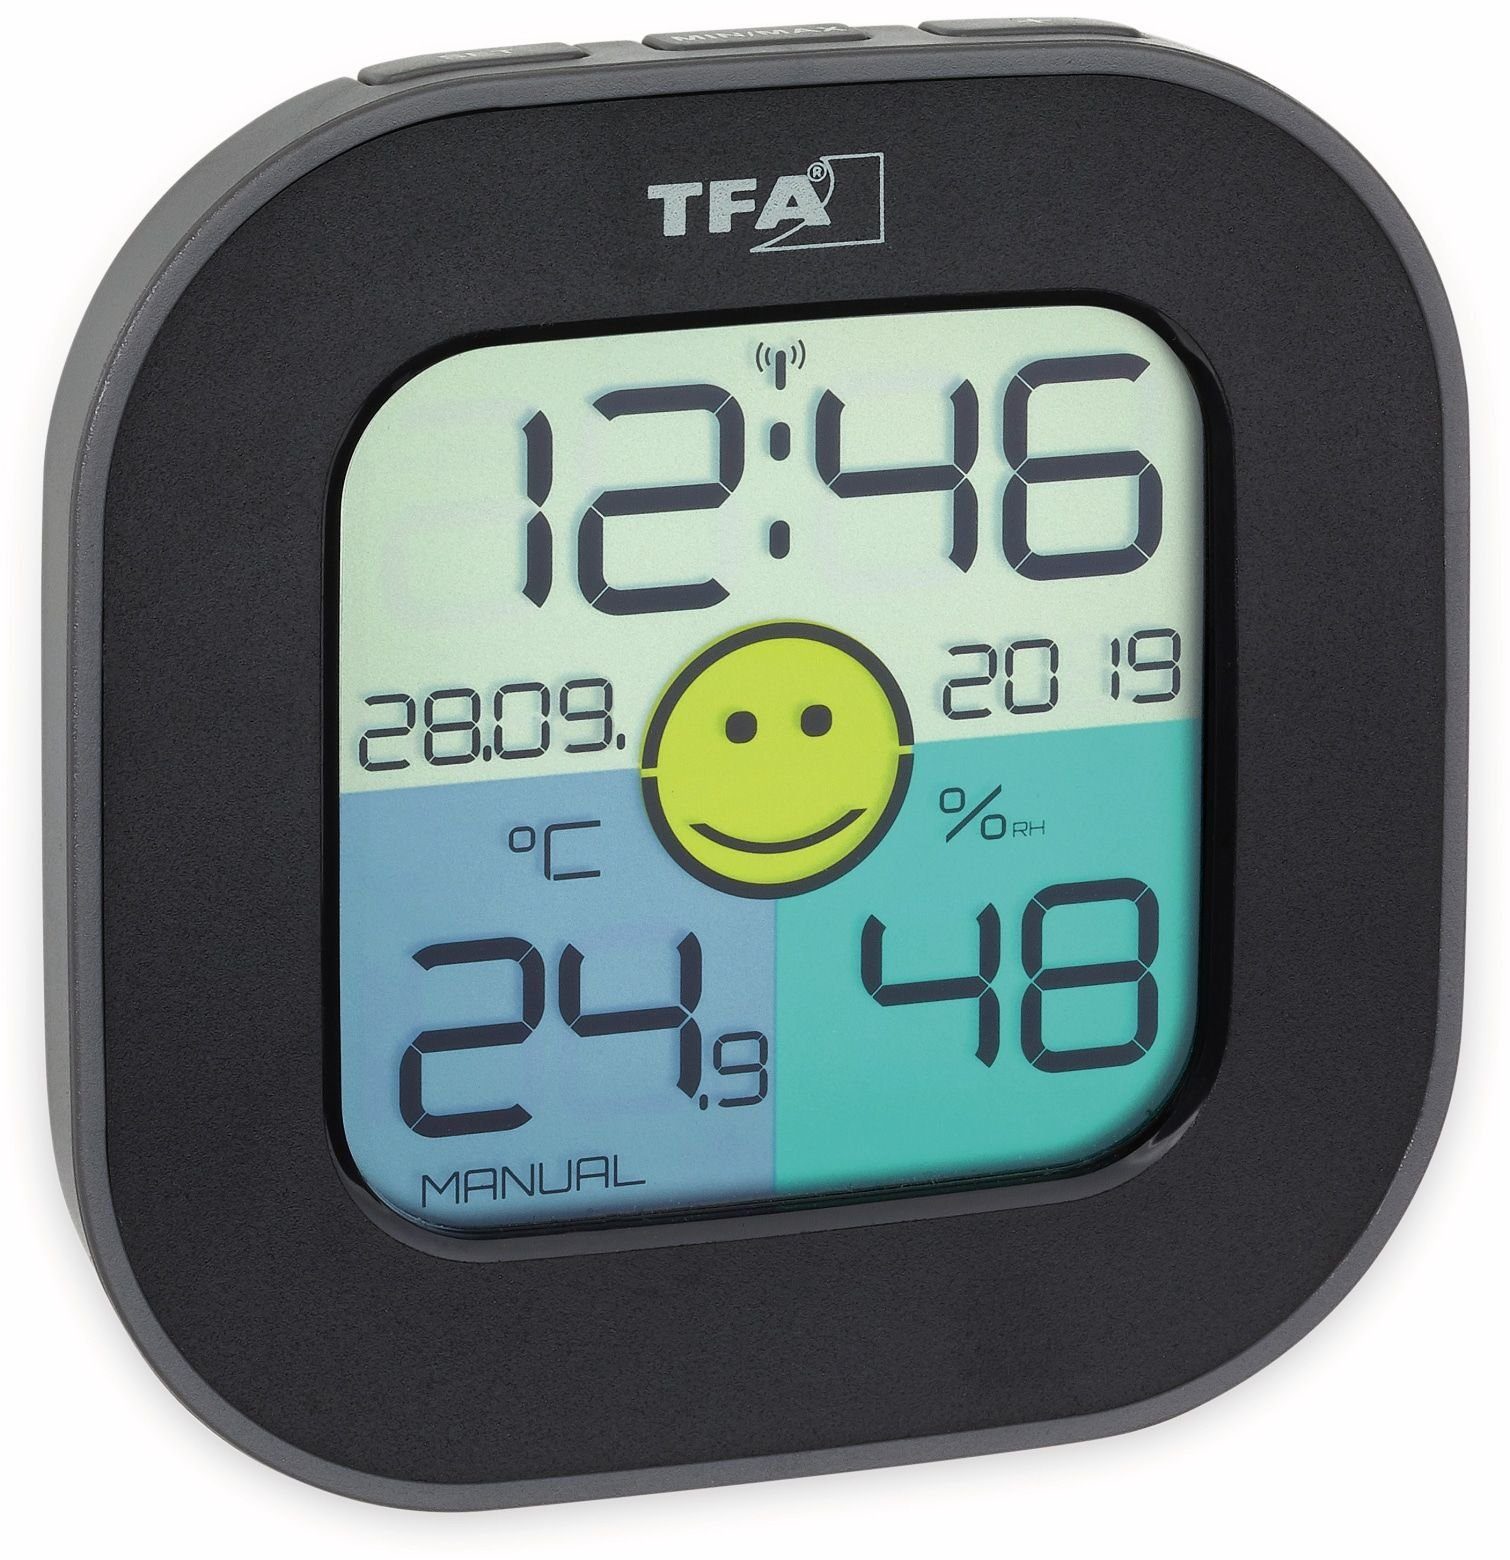 TFA Dostmann Tfa Badethermometer TFA Fun, 30.5050.01 schwarz Digitales Thermo-Hygrometer